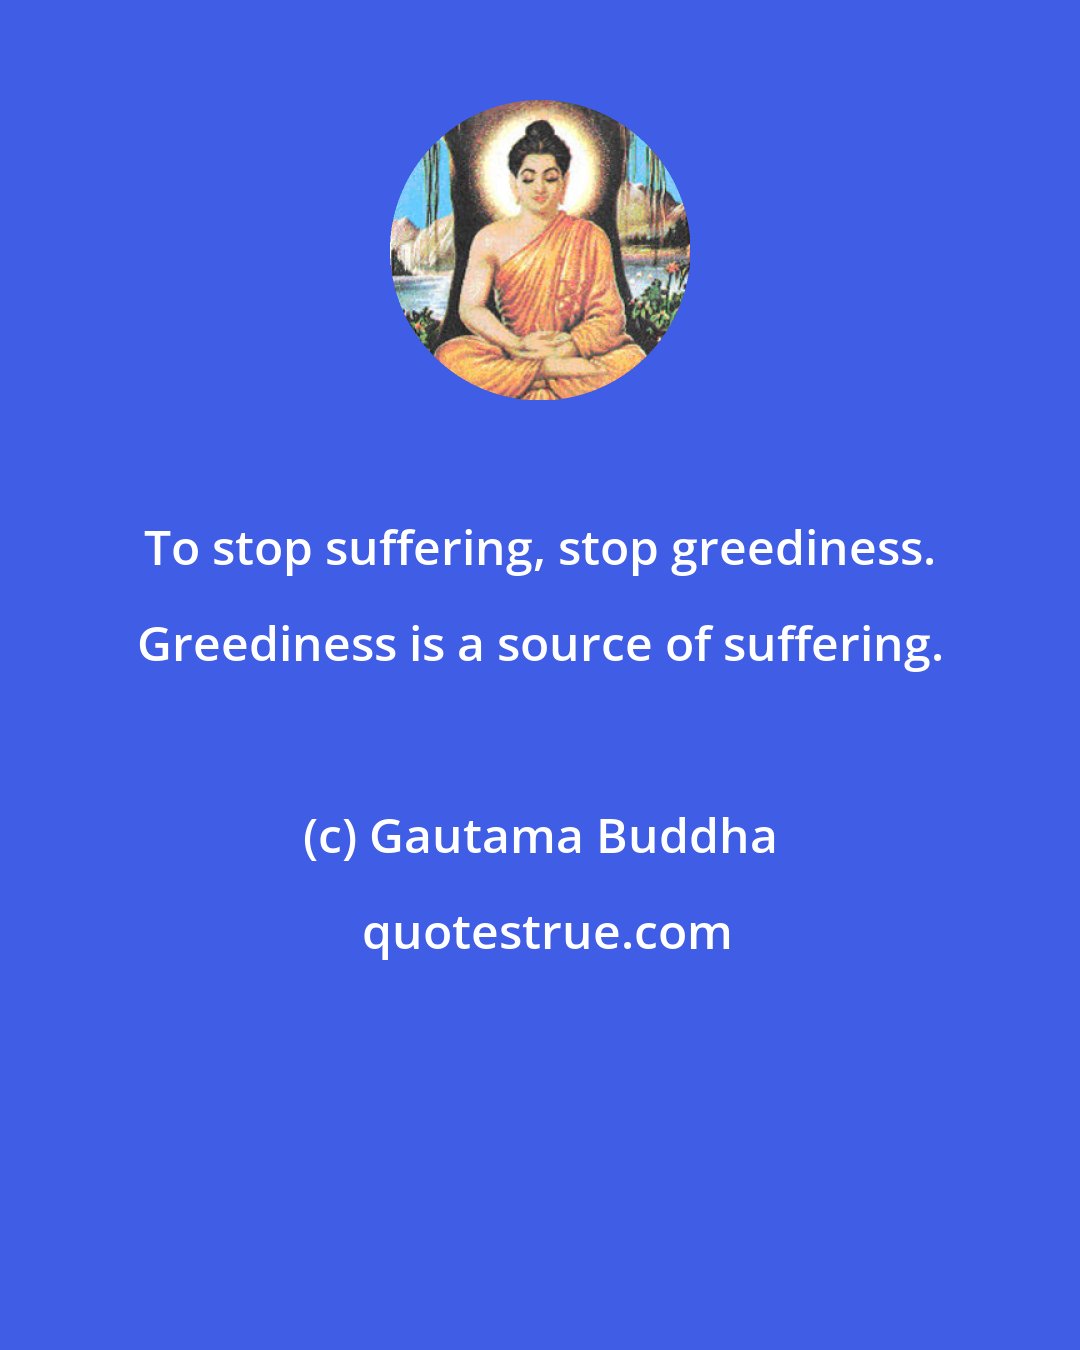 Gautama Buddha: To stop suffering, stop greediness. Greediness is a source of suffering.